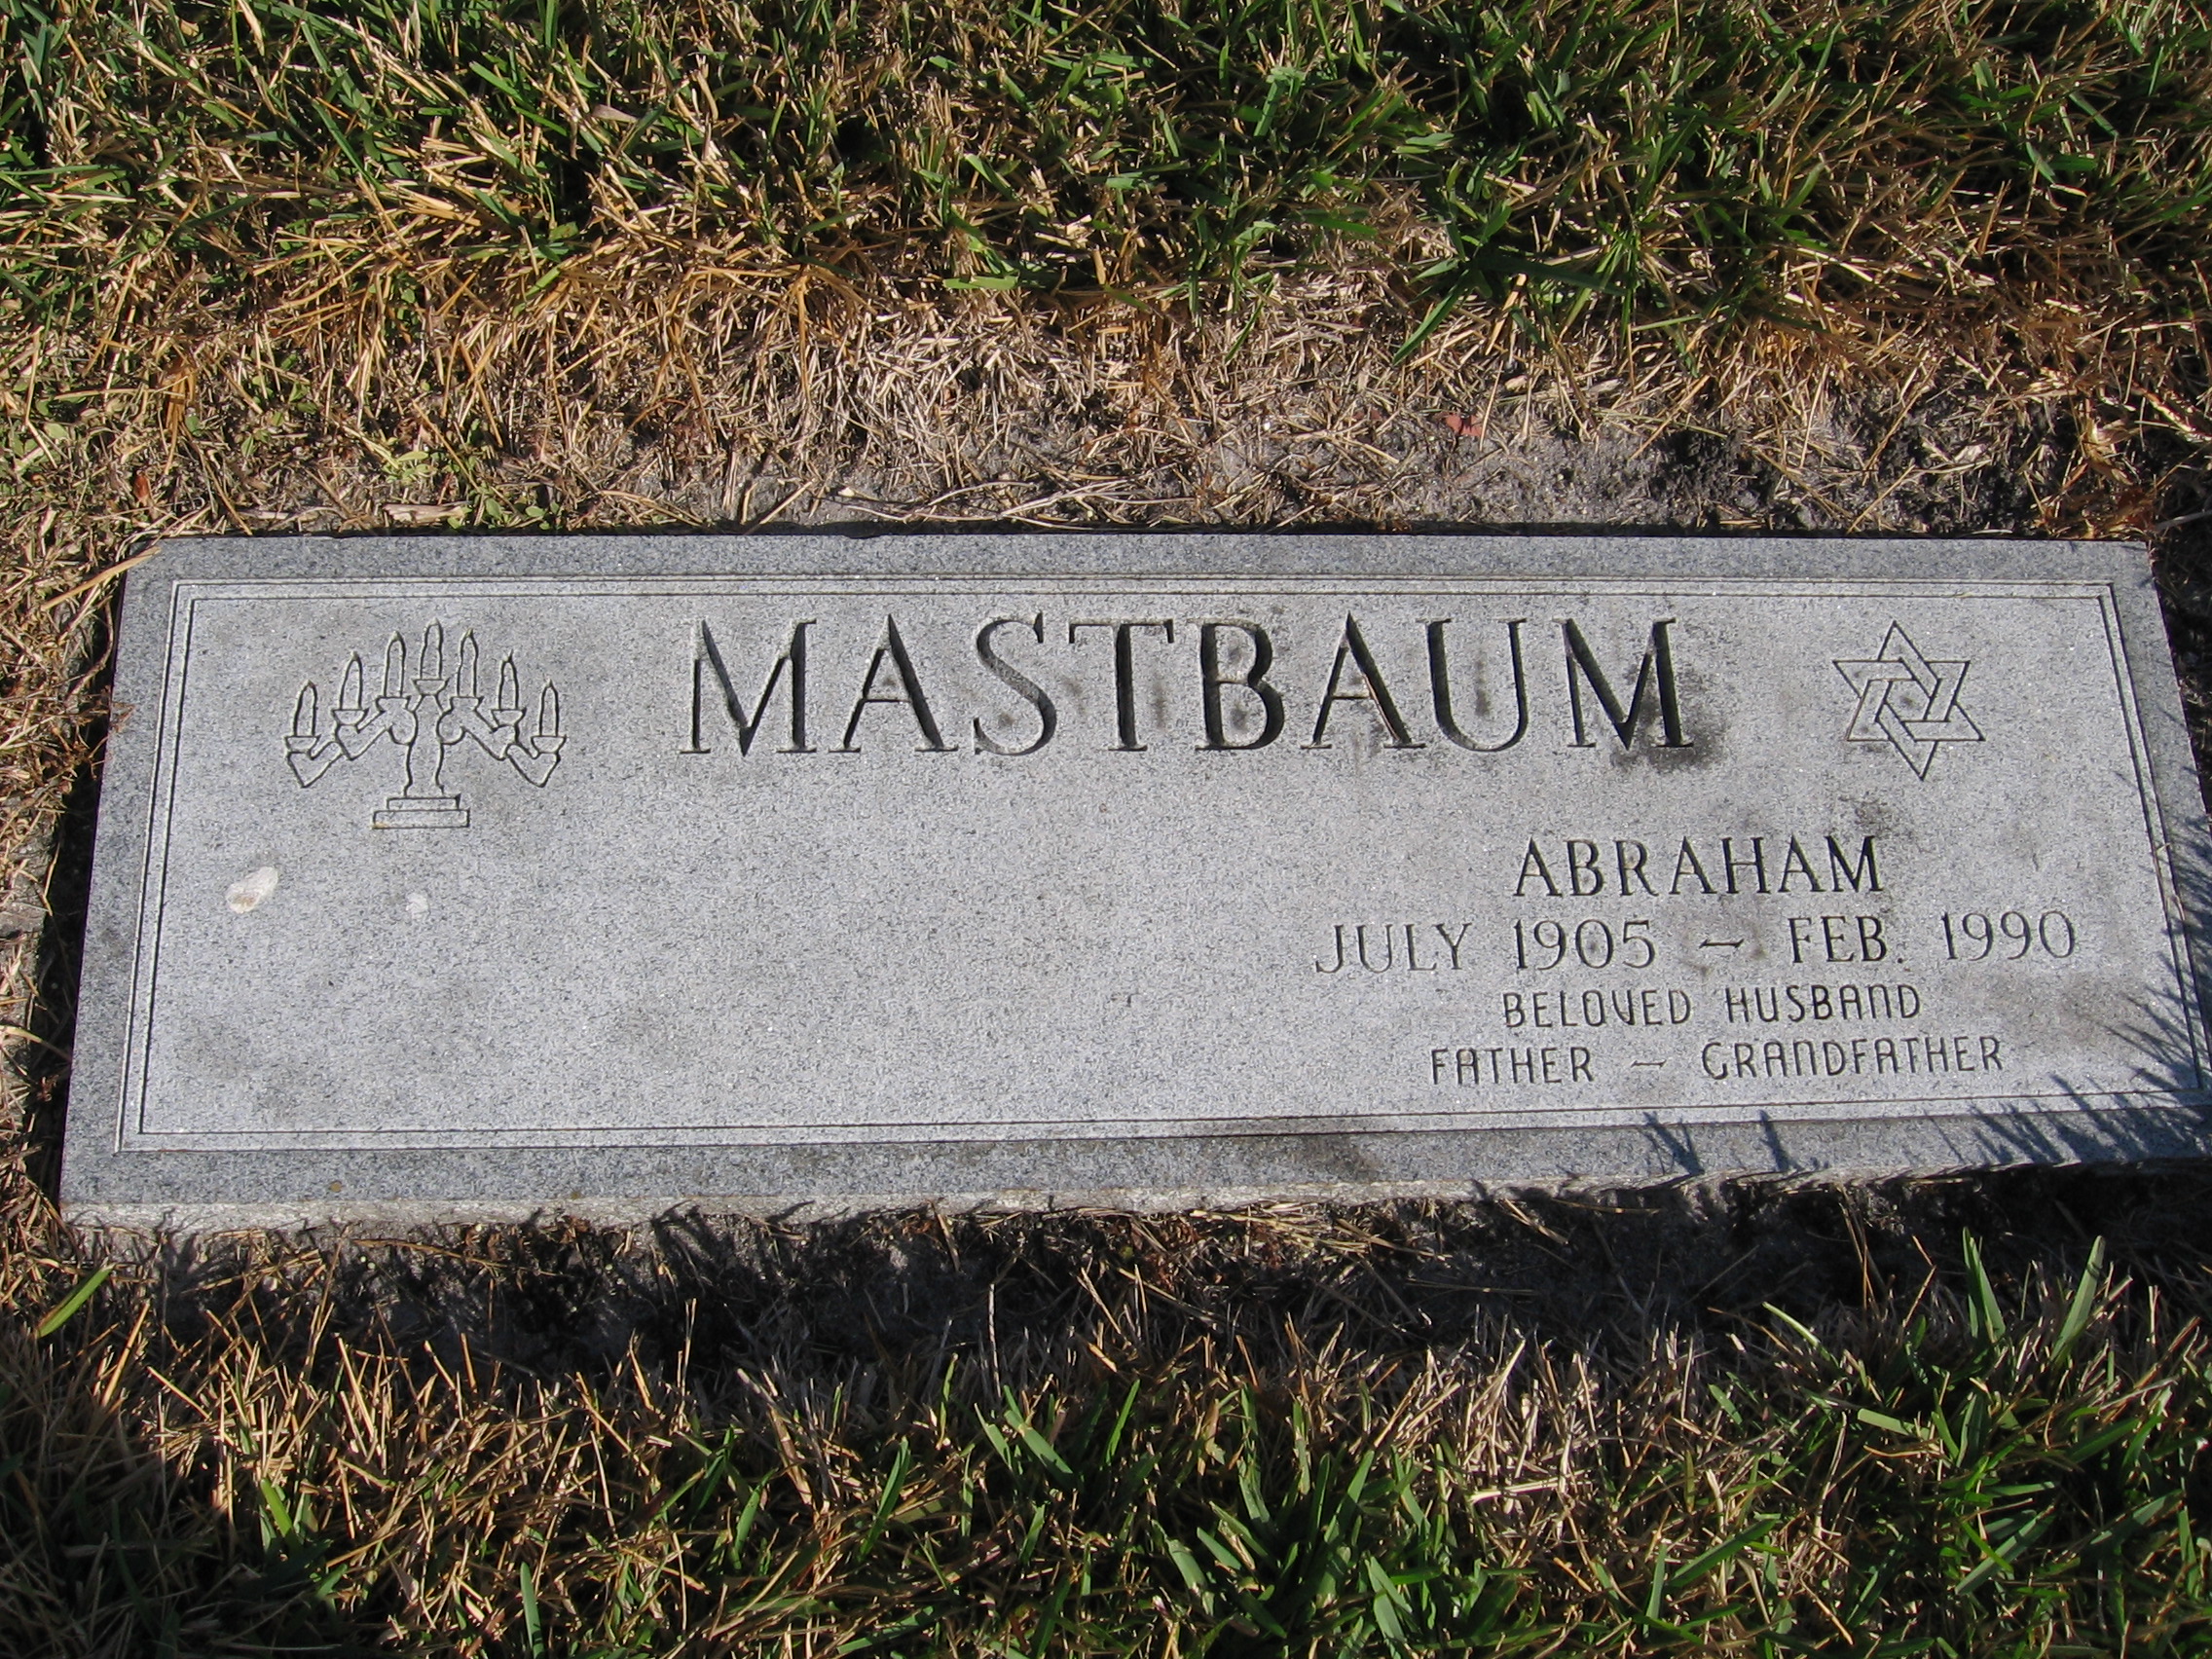 Abraham Mastbaum